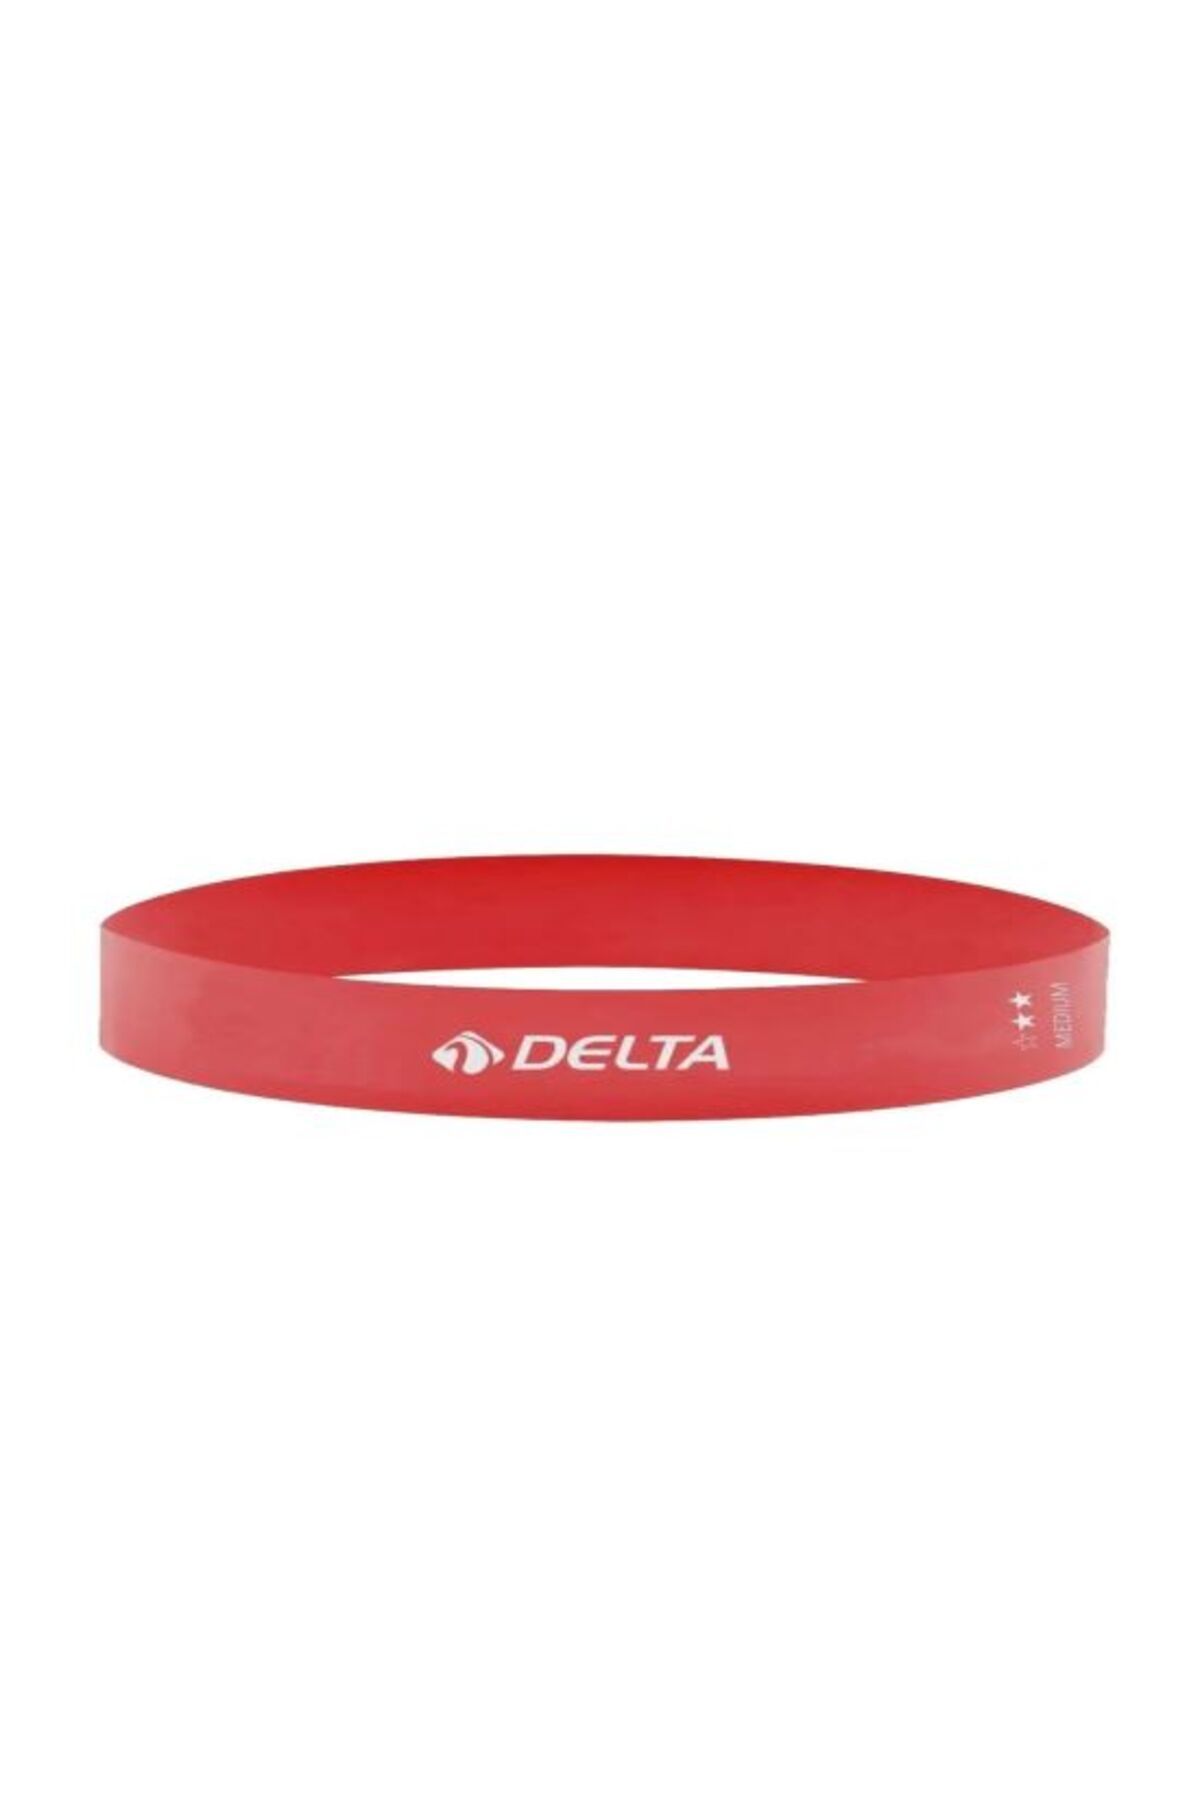 Delta Loop Bant Kırmızı Orta 5 Cm X 50 Cm